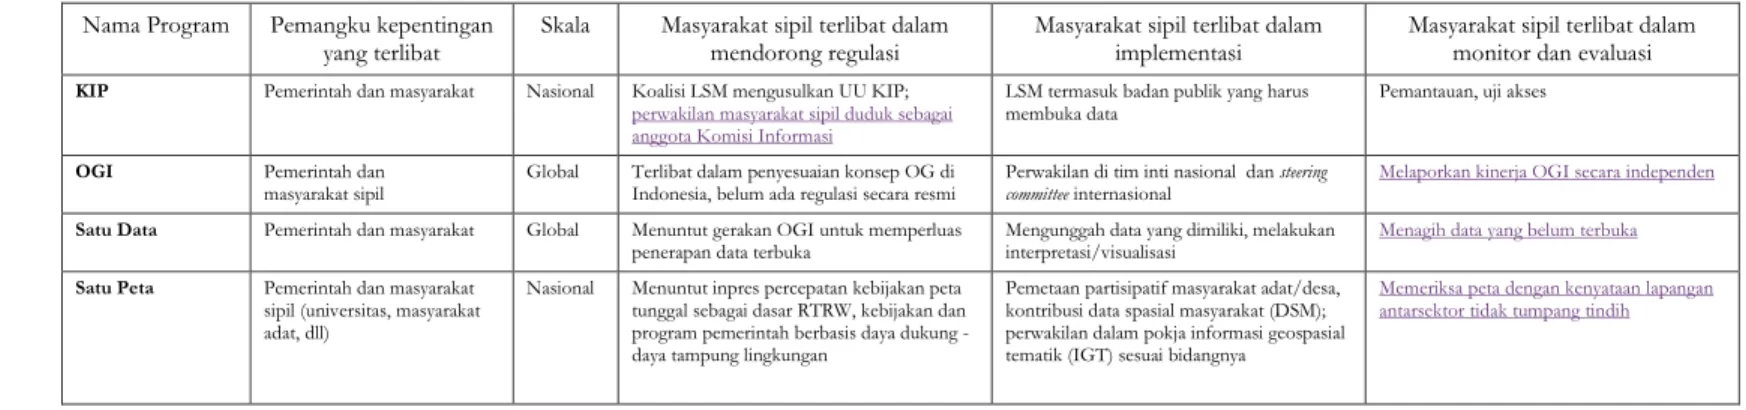 Tabel 7 ²  Prakarsa yang memberi landasan bagi mekanisme transparansi: kK eterlibatan masyarakat sipil  dalam landasan  mekanisme transparansi